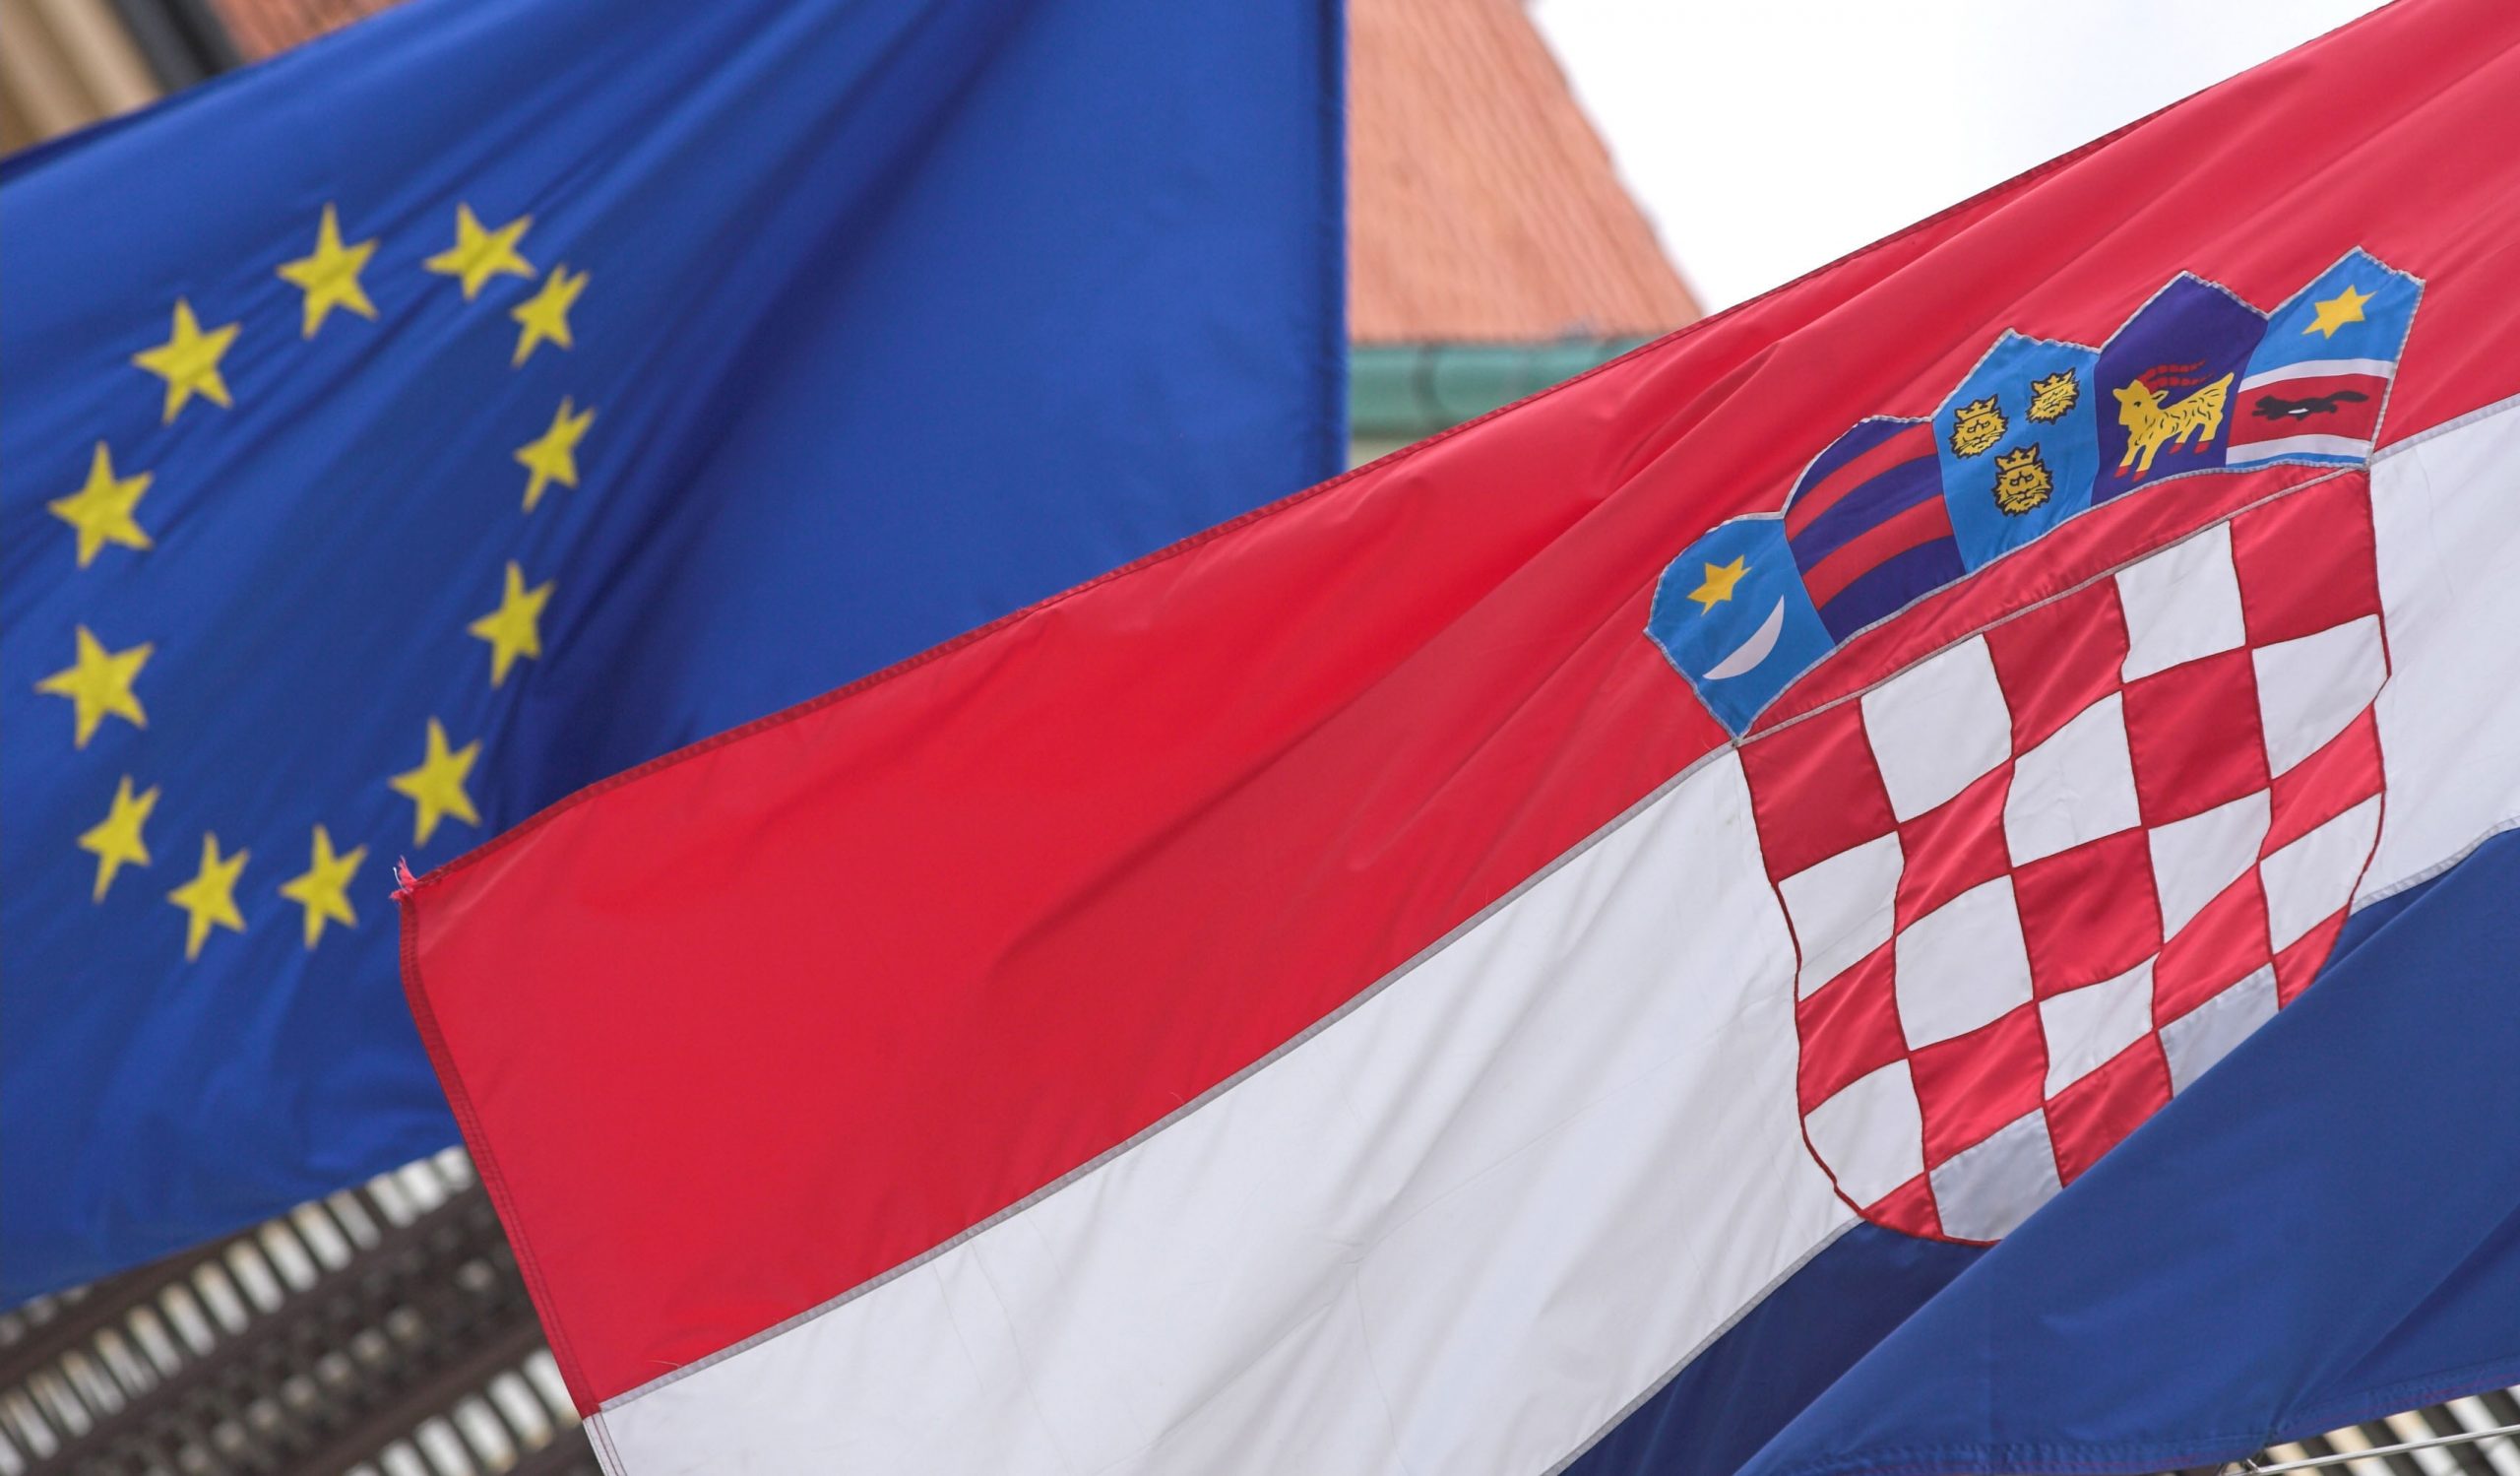 Varava, 4.1.2011 - Poljska vjeruje da æe u vrijeme svojega predsjedanja Europskom unijom u drugoj polovici godine biti potpisan pristupni sporazum s Hrvatskom, a da æe se u skladu s prioritetom predsjedanja nastaviti proirenje Unije, odnosno poèeti i pristupni pregovori s nekom od zemalja zapadnog Balkana. Pristupni sporazum s Hrvatskom sigurno æe biti potpisan. Zavrit æe pregovori s Islandom, a moda poèeti s nekim balkanskim zemljama. Ako bude potpisan sporazom o pridruivanju s Ukrajinom, bit æe to nov znak da je EU otvoren", rekao je zamjenik poljskog ministra vanjskih poslova odgovoran za poljsko predsjedanje EU-om Mikolaj Dowgielewicz u intervjuu za Gazetu Wyborczu.
foto FaH/ Lana SLIVAR DOMINIÆ/ ua